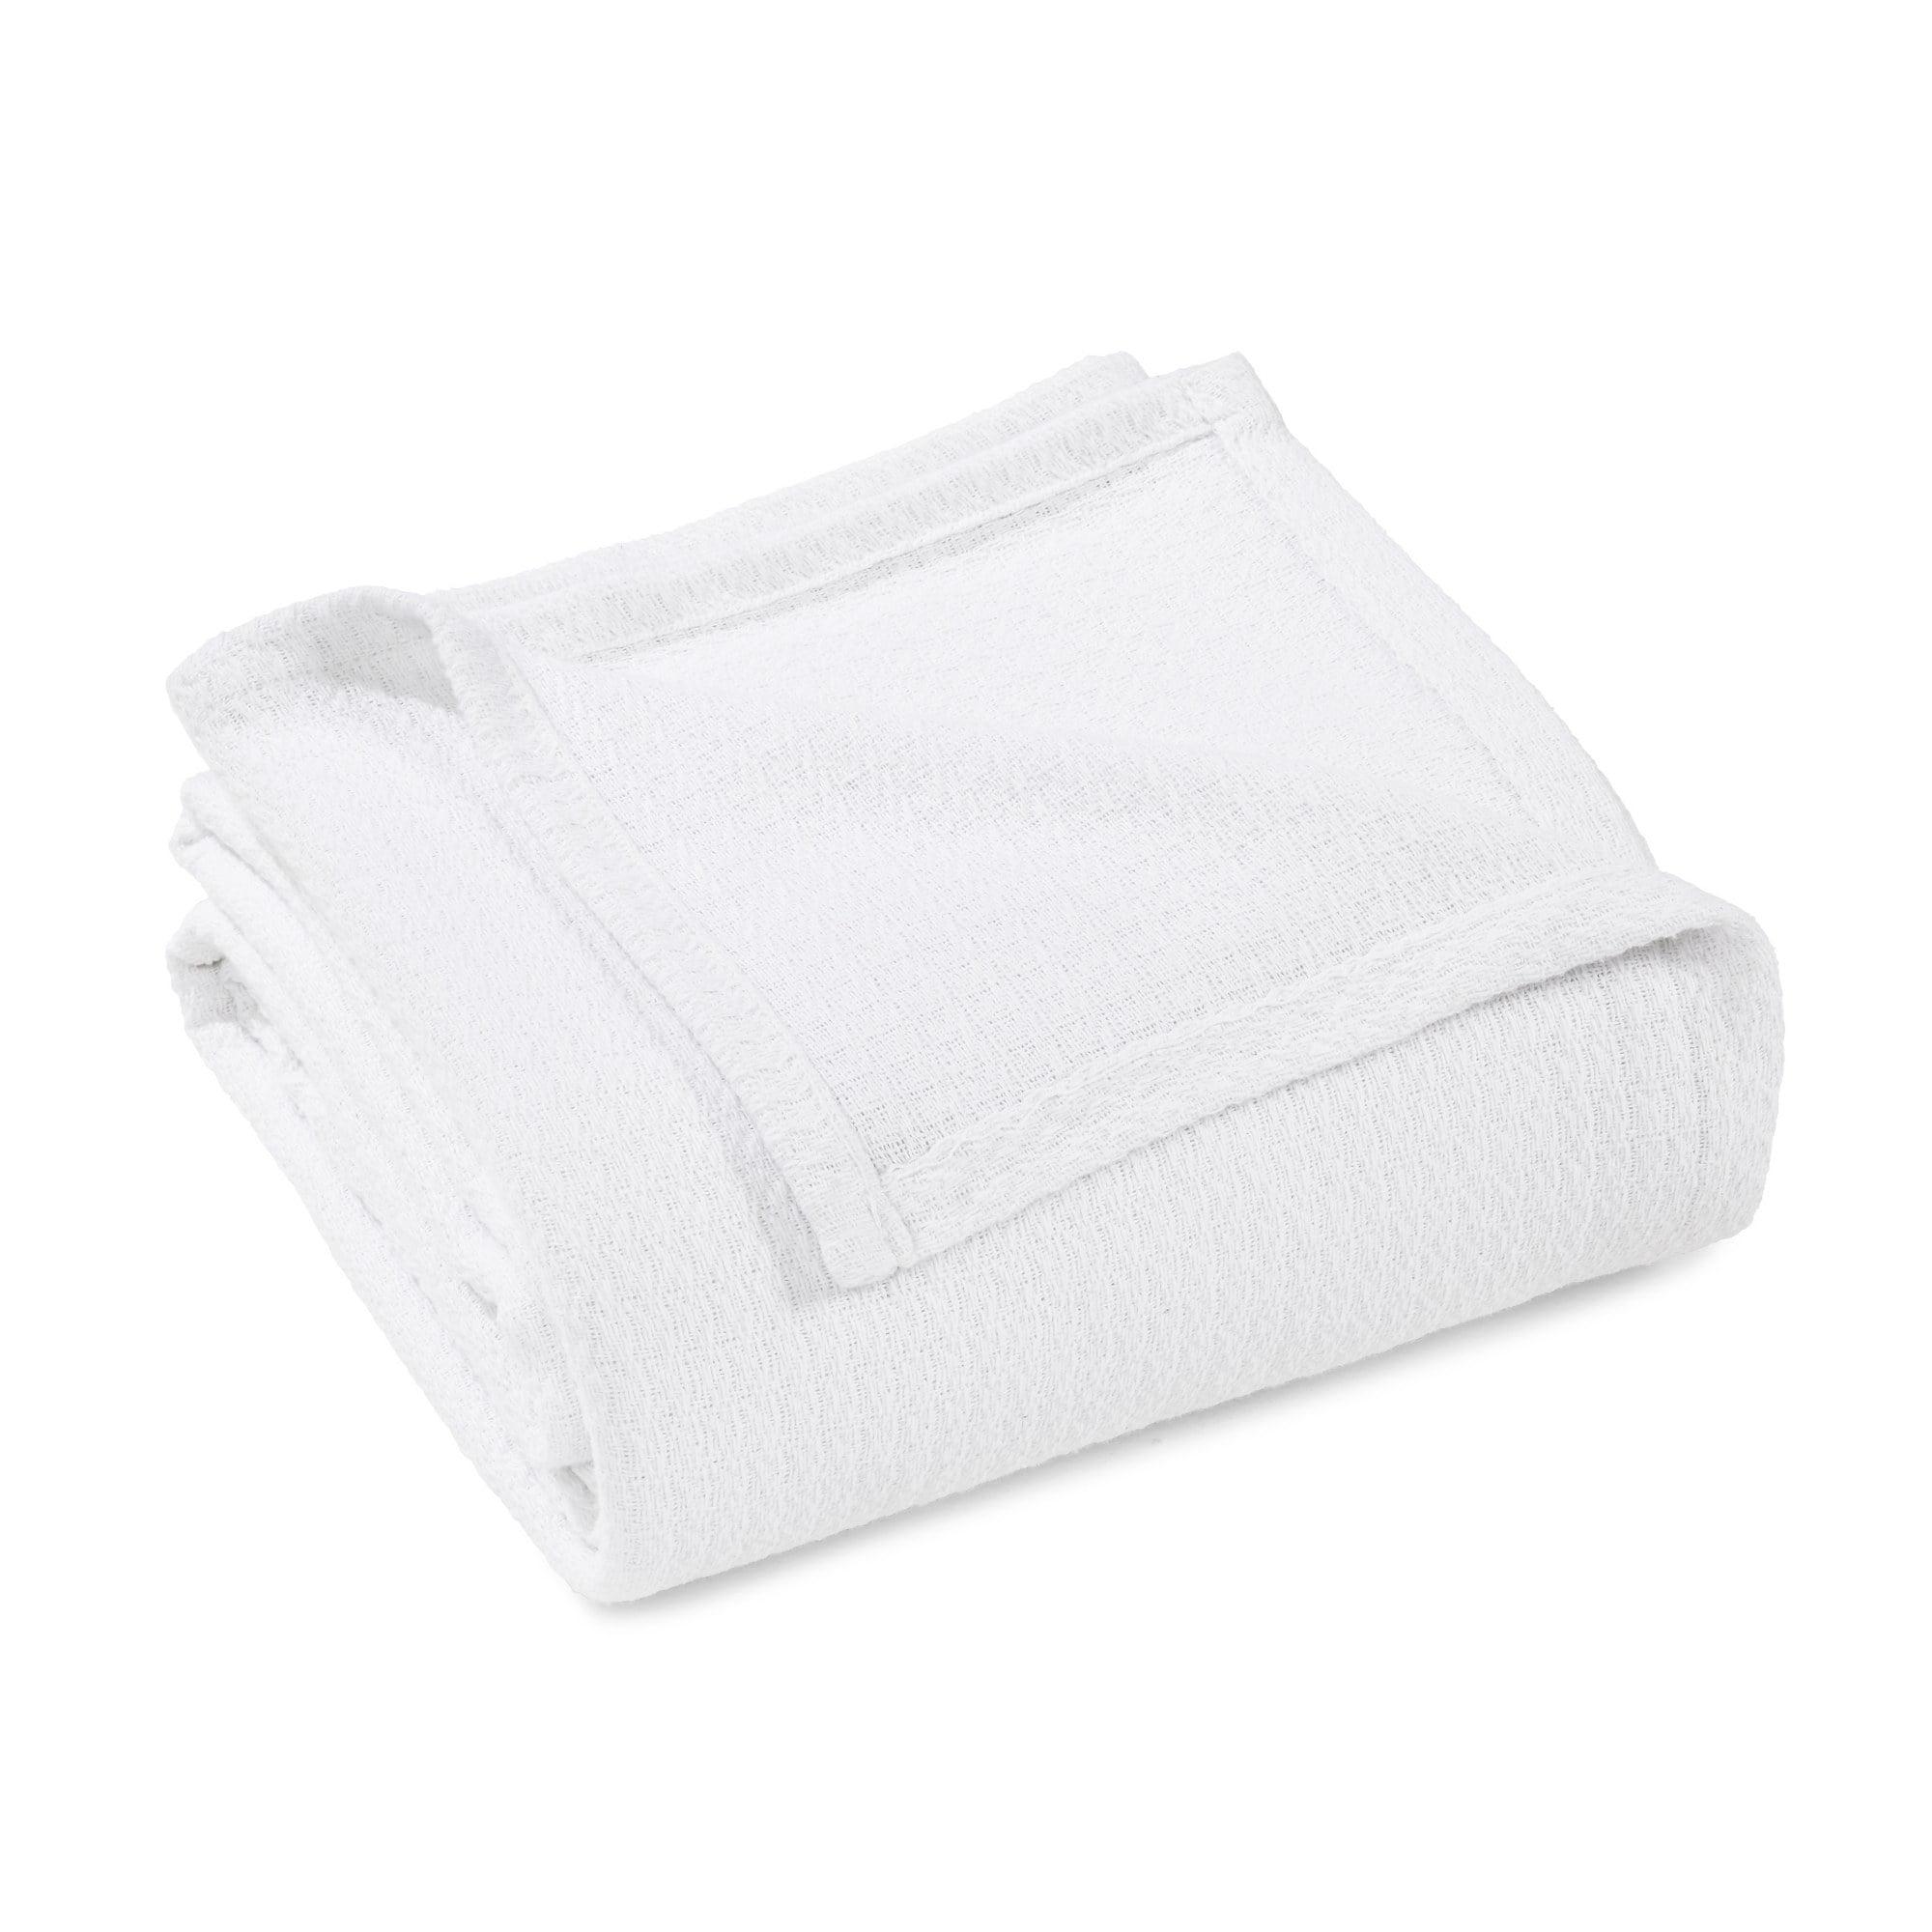 King-Sized White Cotton Waffle Weave Knit Throw Blanket